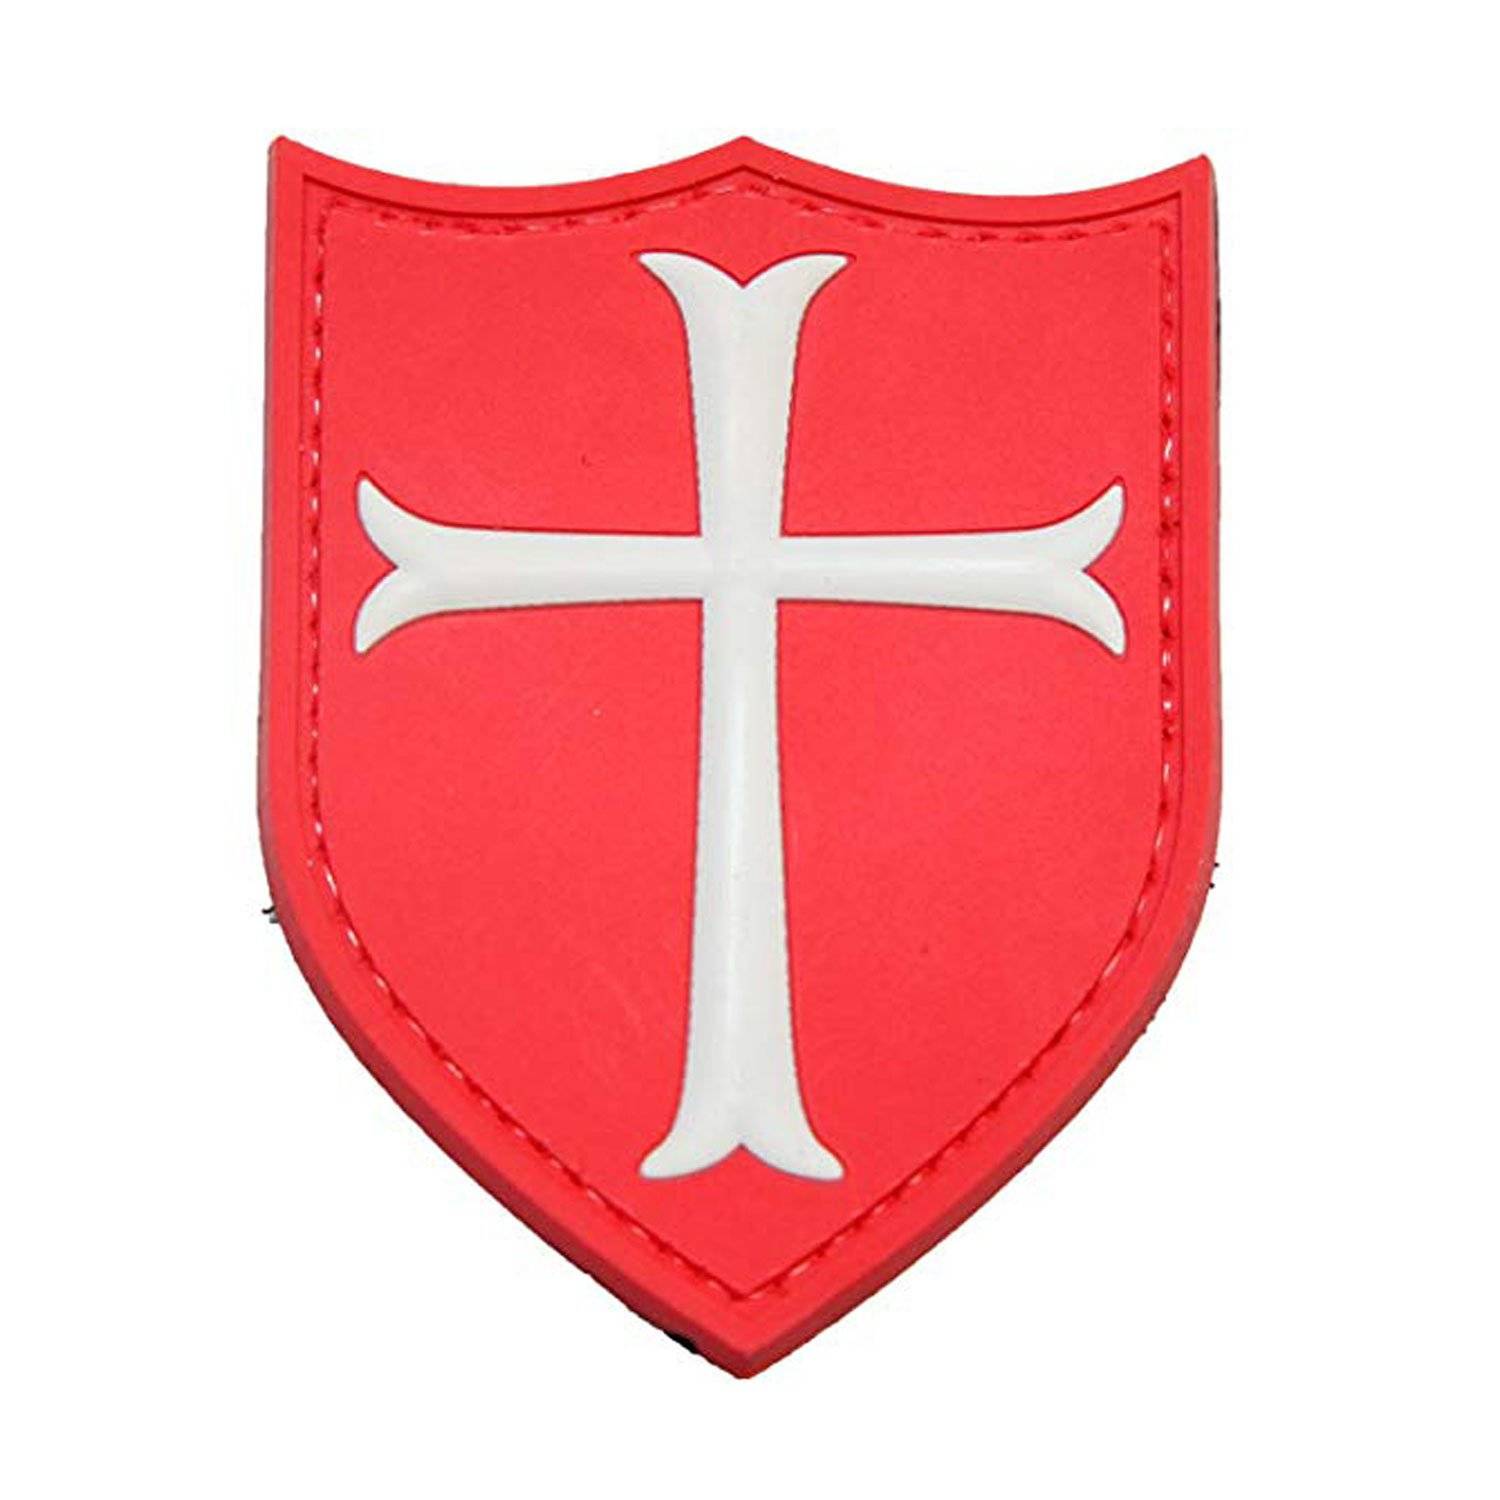 PFI Fashions Knights Templar Cross Shield PVC Morale Patch